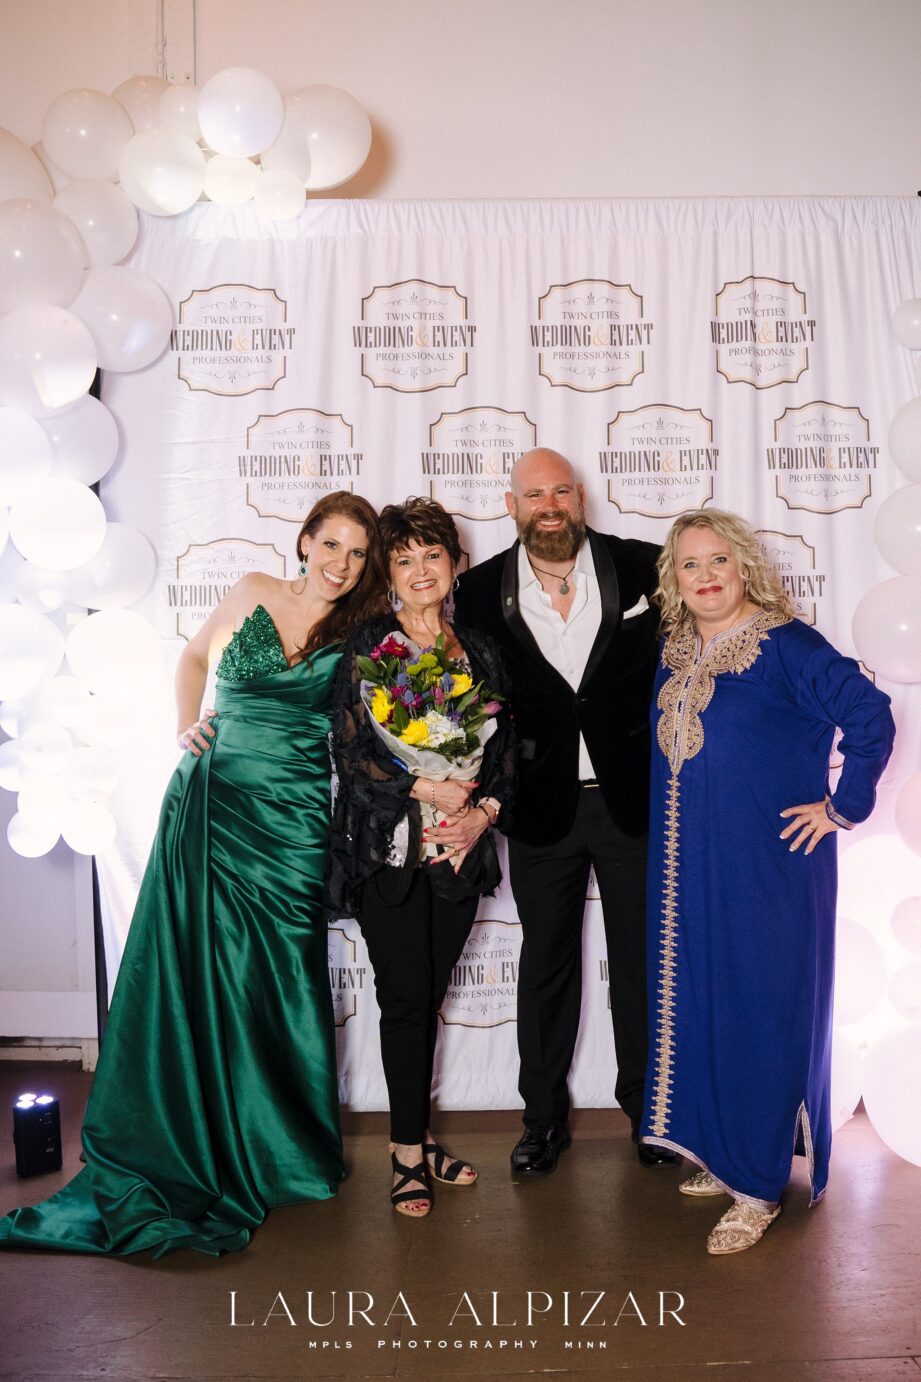 2023 TCWEP 14th Anniversary Gala + Award Show
Elizabeth Sherry
Renee Aymar Kostmatka Renees Limousines
Matthew Sherry
Michelle Tverberg